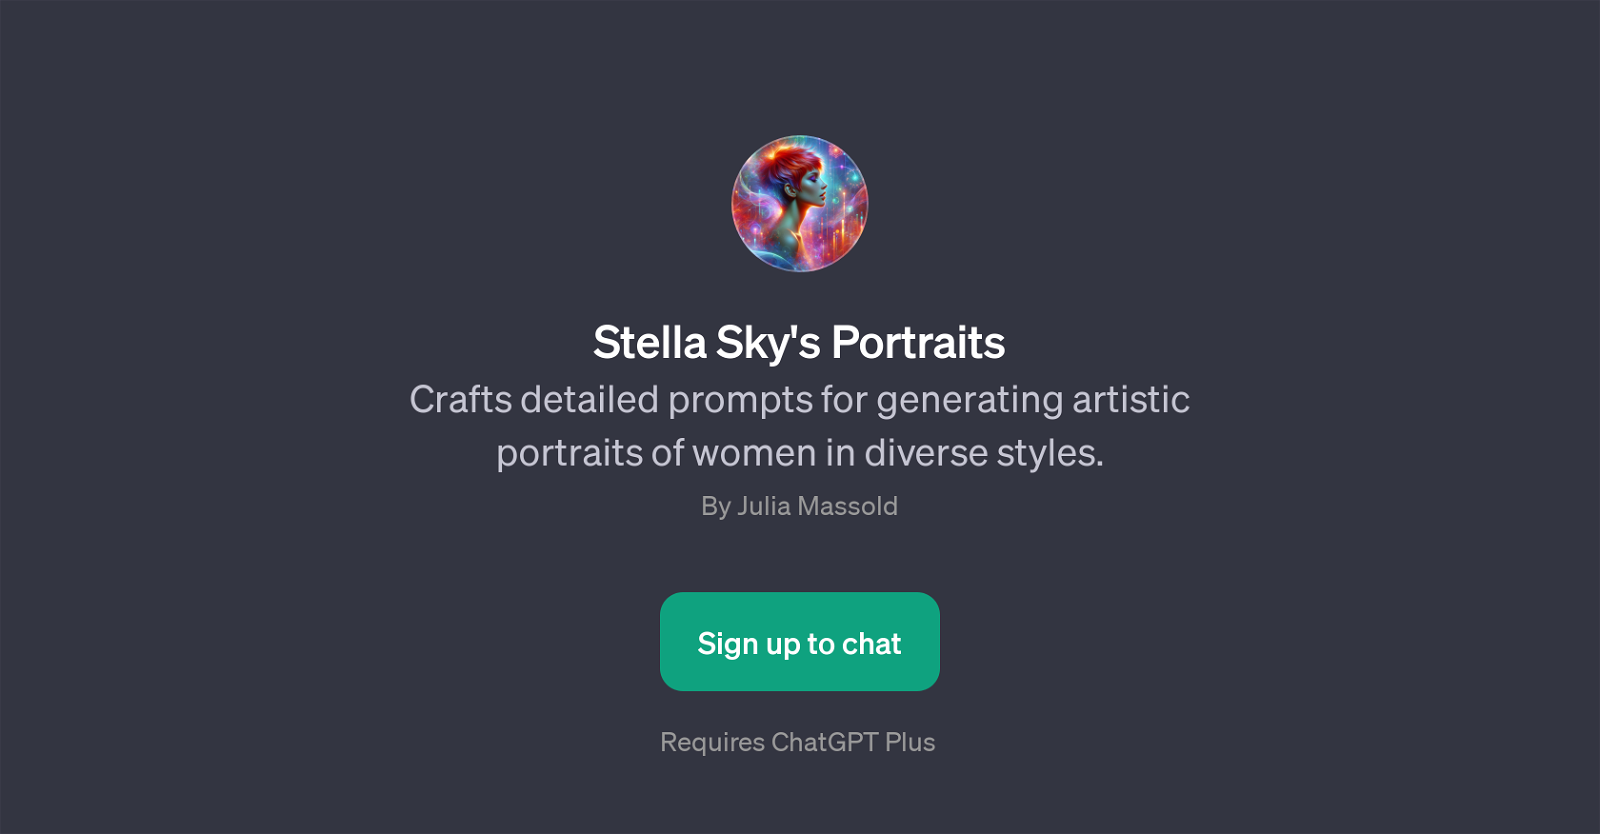 Stella Sky's Portraits website